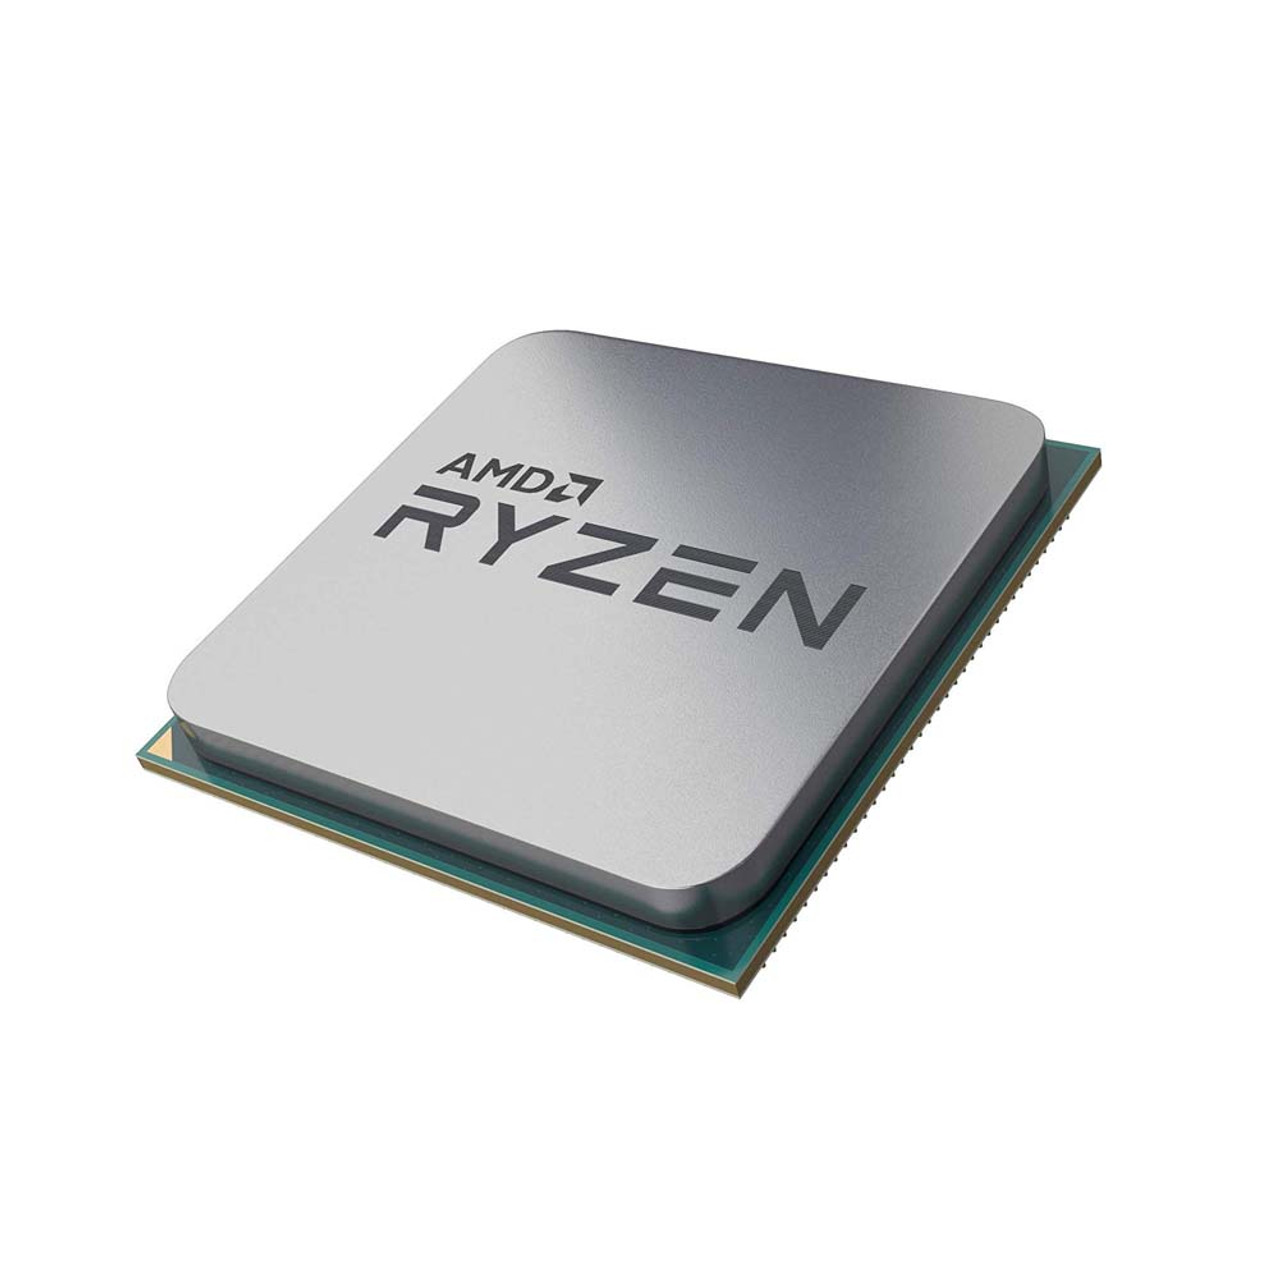 AMD YD3400C5FHBOX Ryzen 5 3400G 4-Core 8-Thread Unlocked Desktop Processor with Radeon RX Graphics